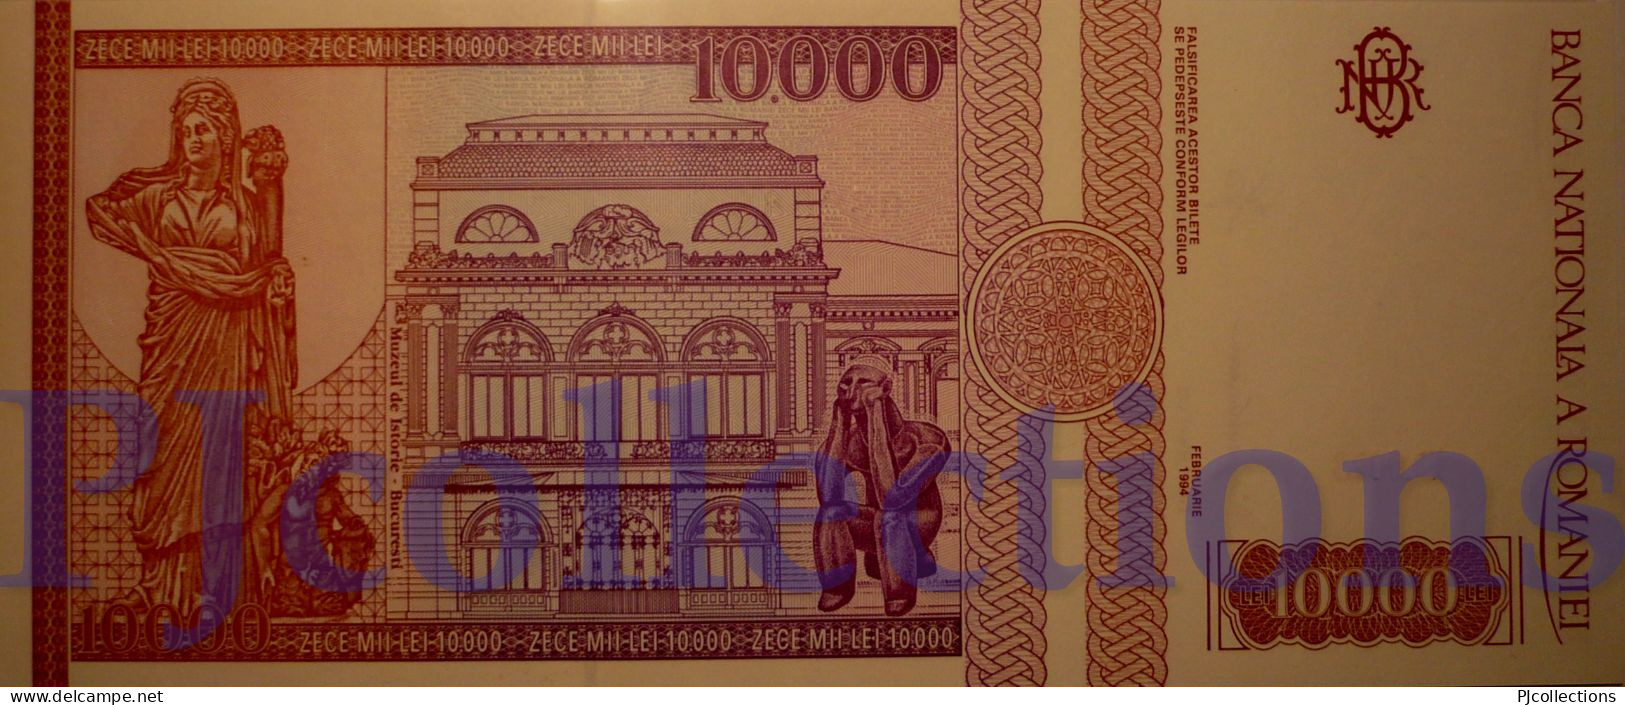 ROMANIA 10000 LEI 1994 PICK 105 UNC - Roumanie